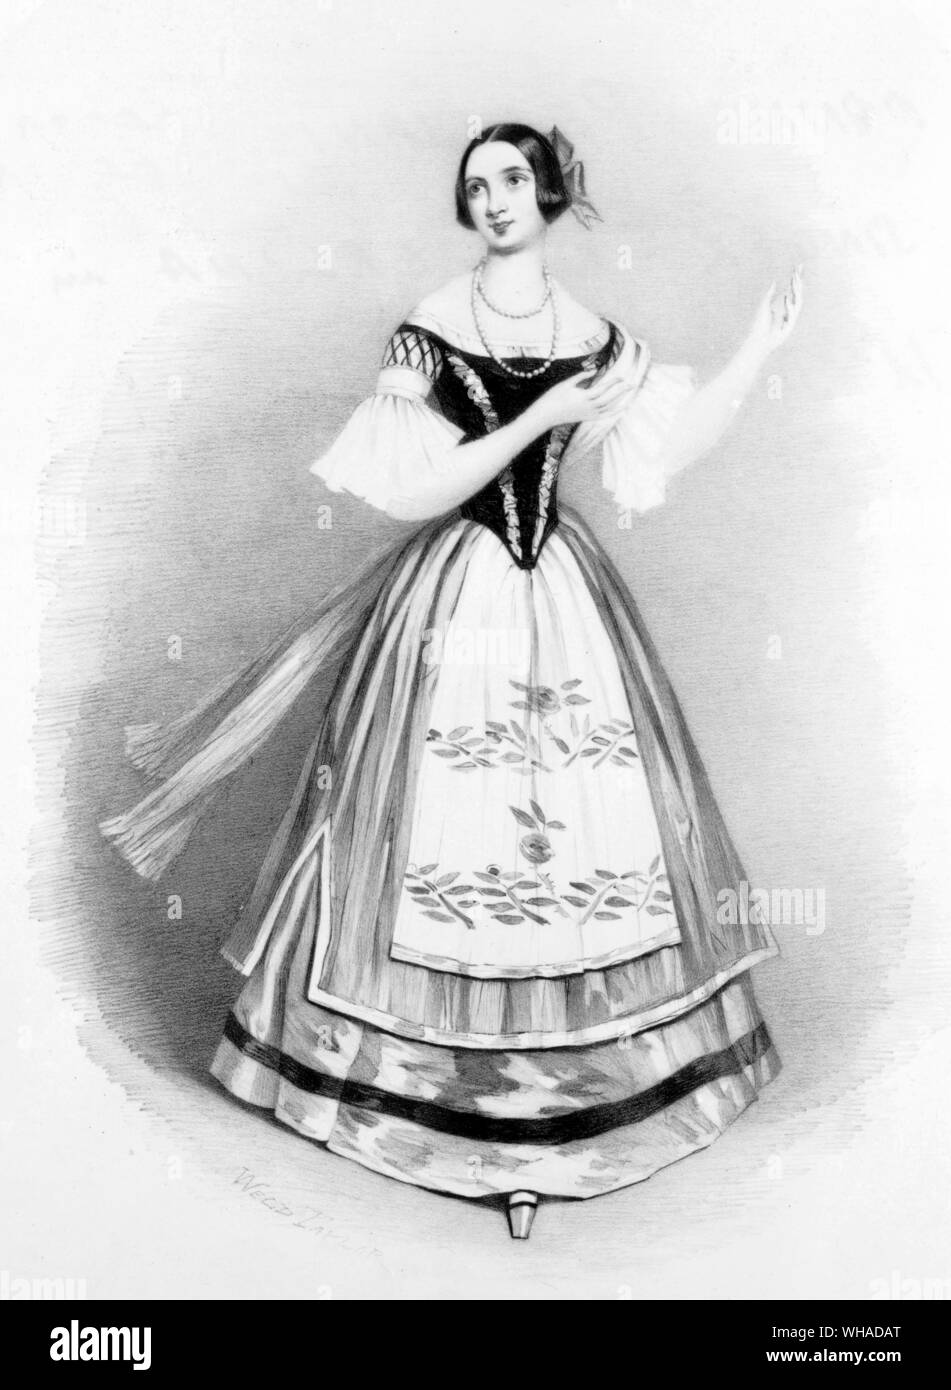 Fanny Persiani. Opera singer as Zerlina in Don Giovanni Stock Photo